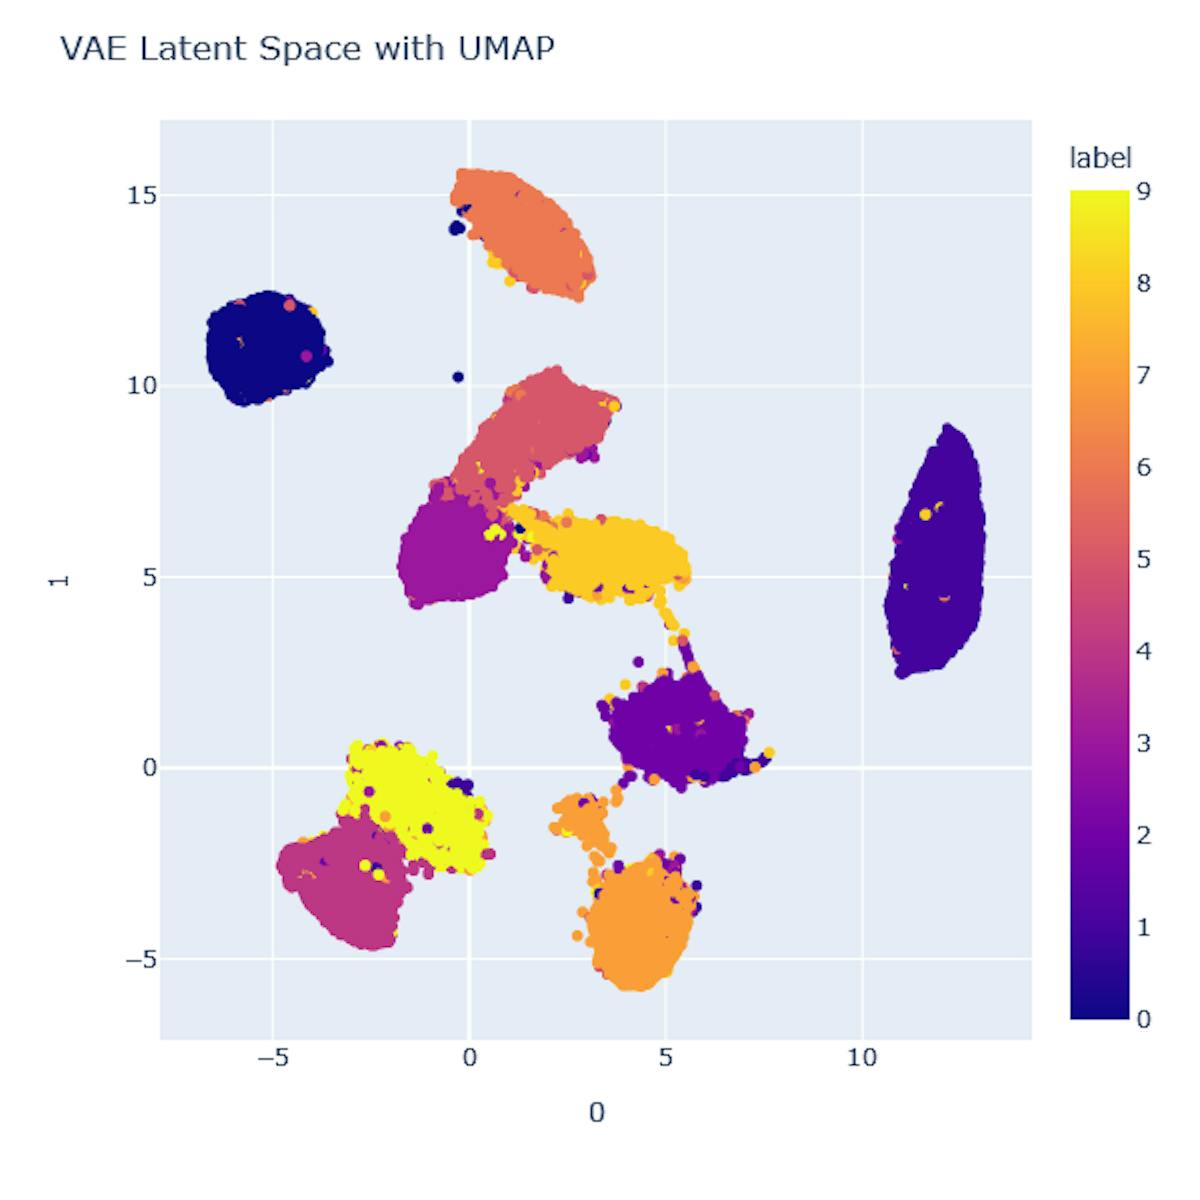 VAE model latent space visualized with UMAP 